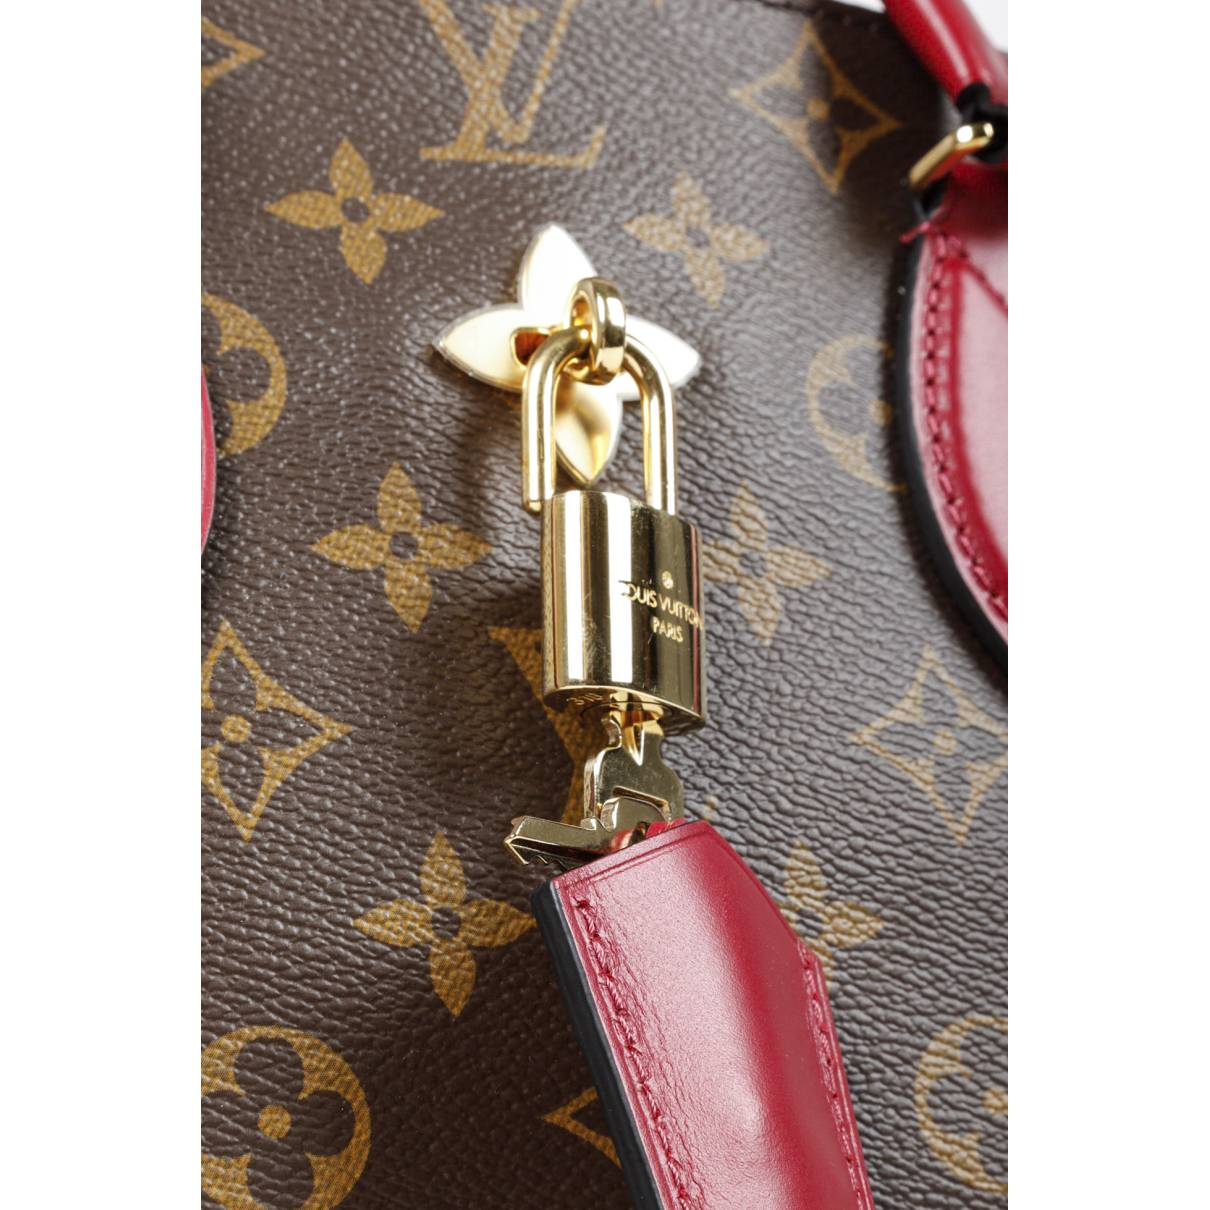 Louis Vuitton - Authenticated Flower Tote Handbag - Cloth Burgundy for Women, Never Worn